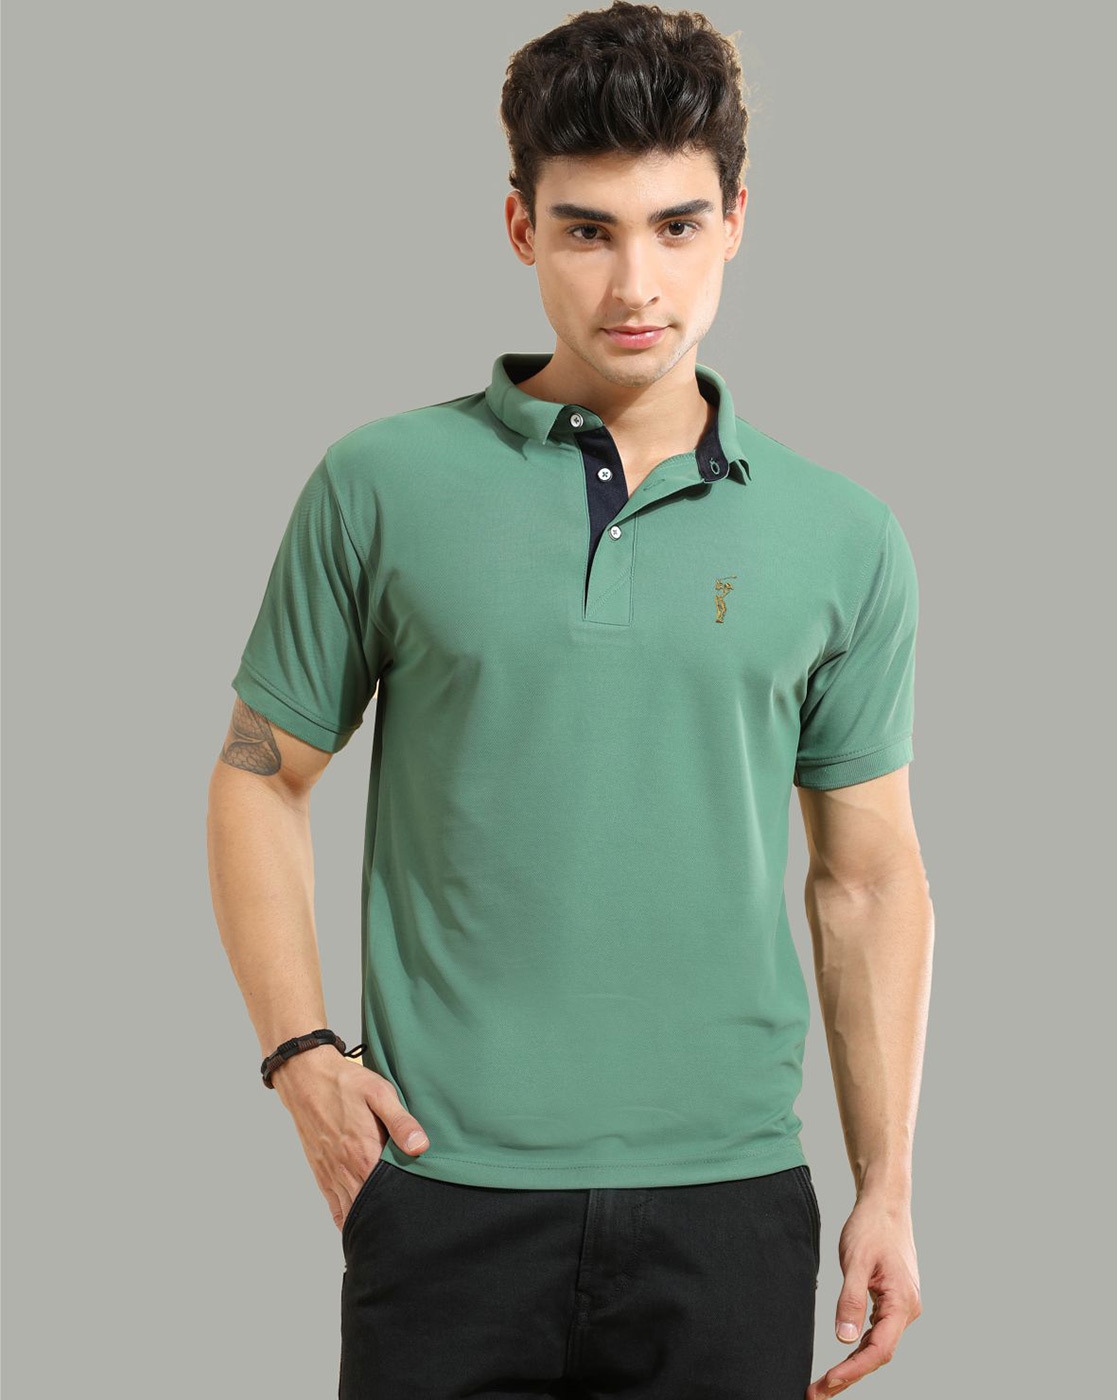 Buy Green Tshirts for Men by Stellers | Ajio.com